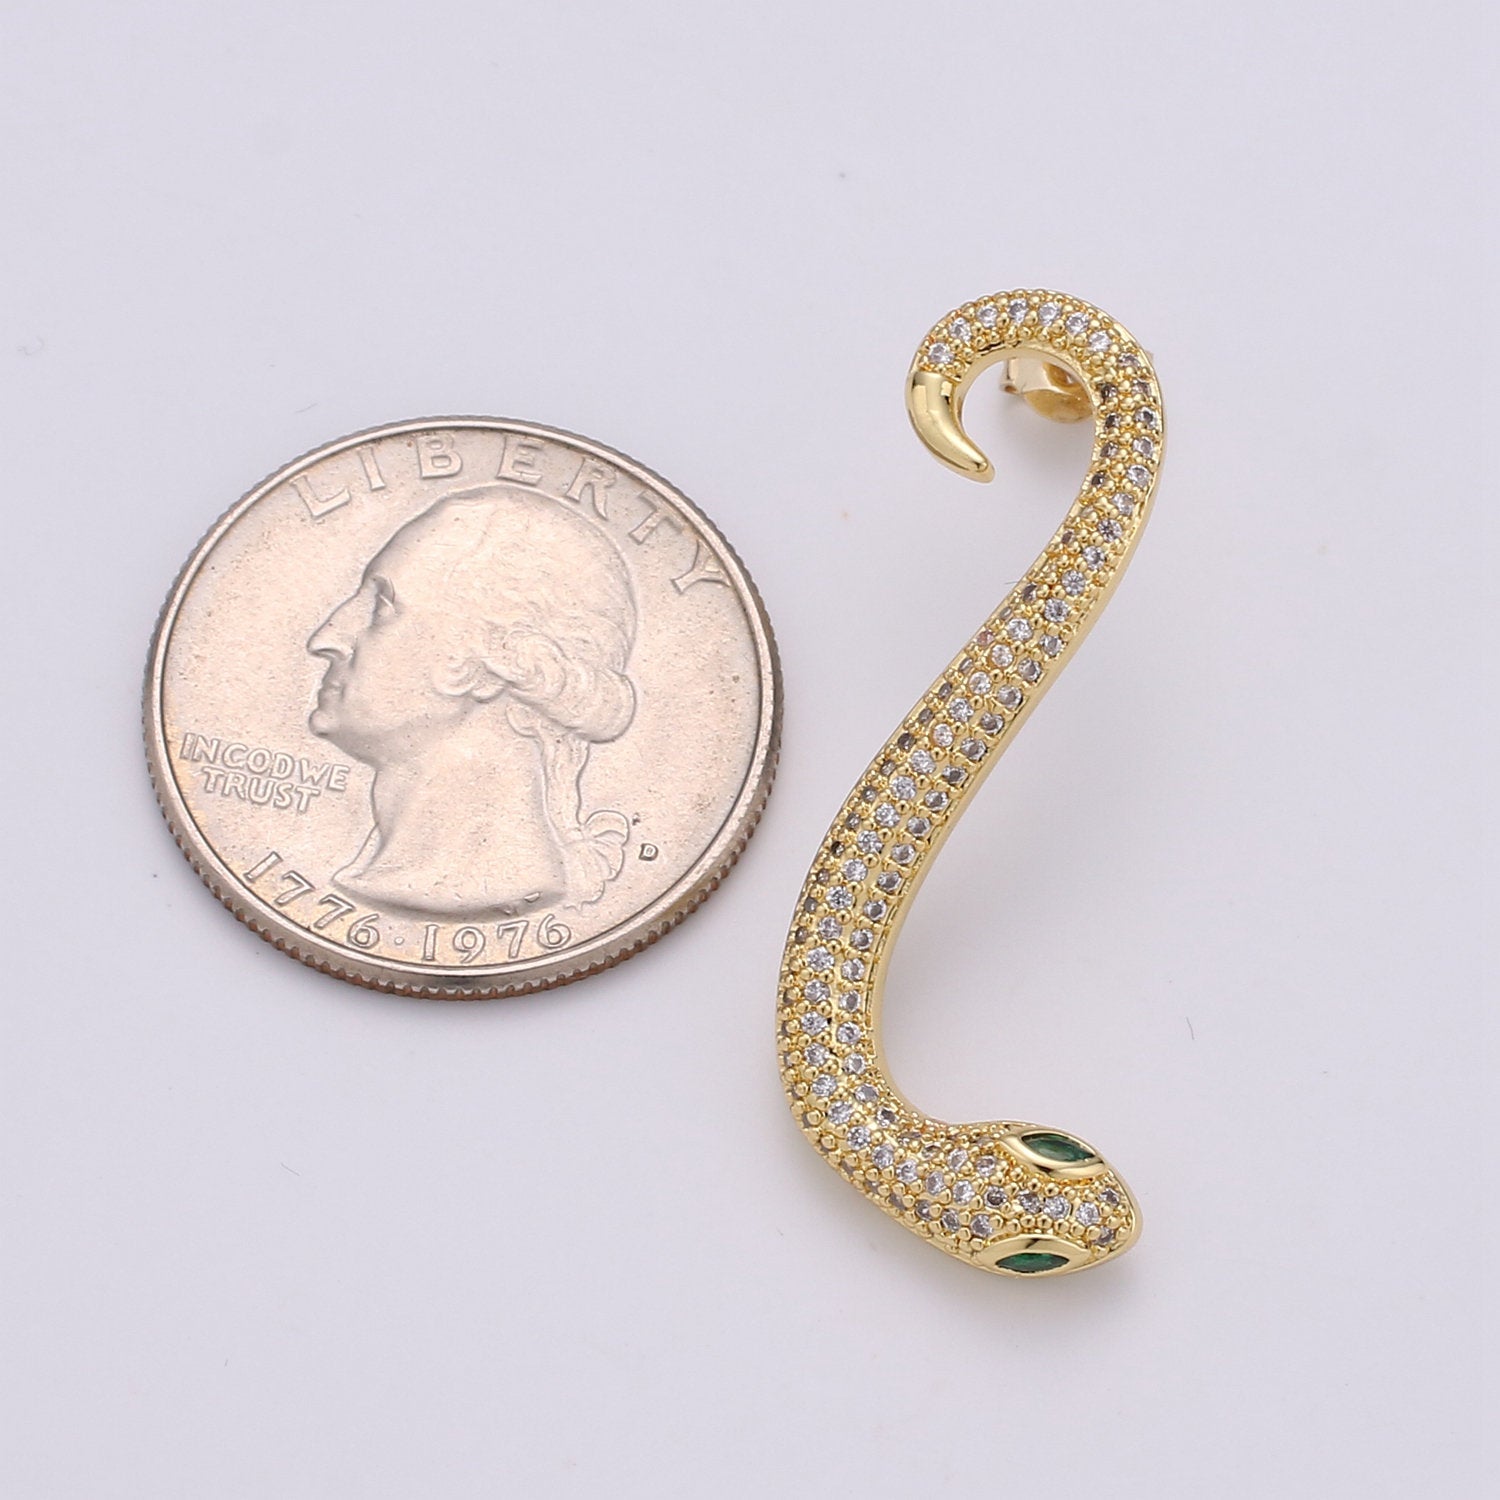 Gold snake earrings asp cleopatra toga serpent dangle 40mm long lightweight earrings Serpent snake Jewelry Micro pave Stud Earring - DLUXCA